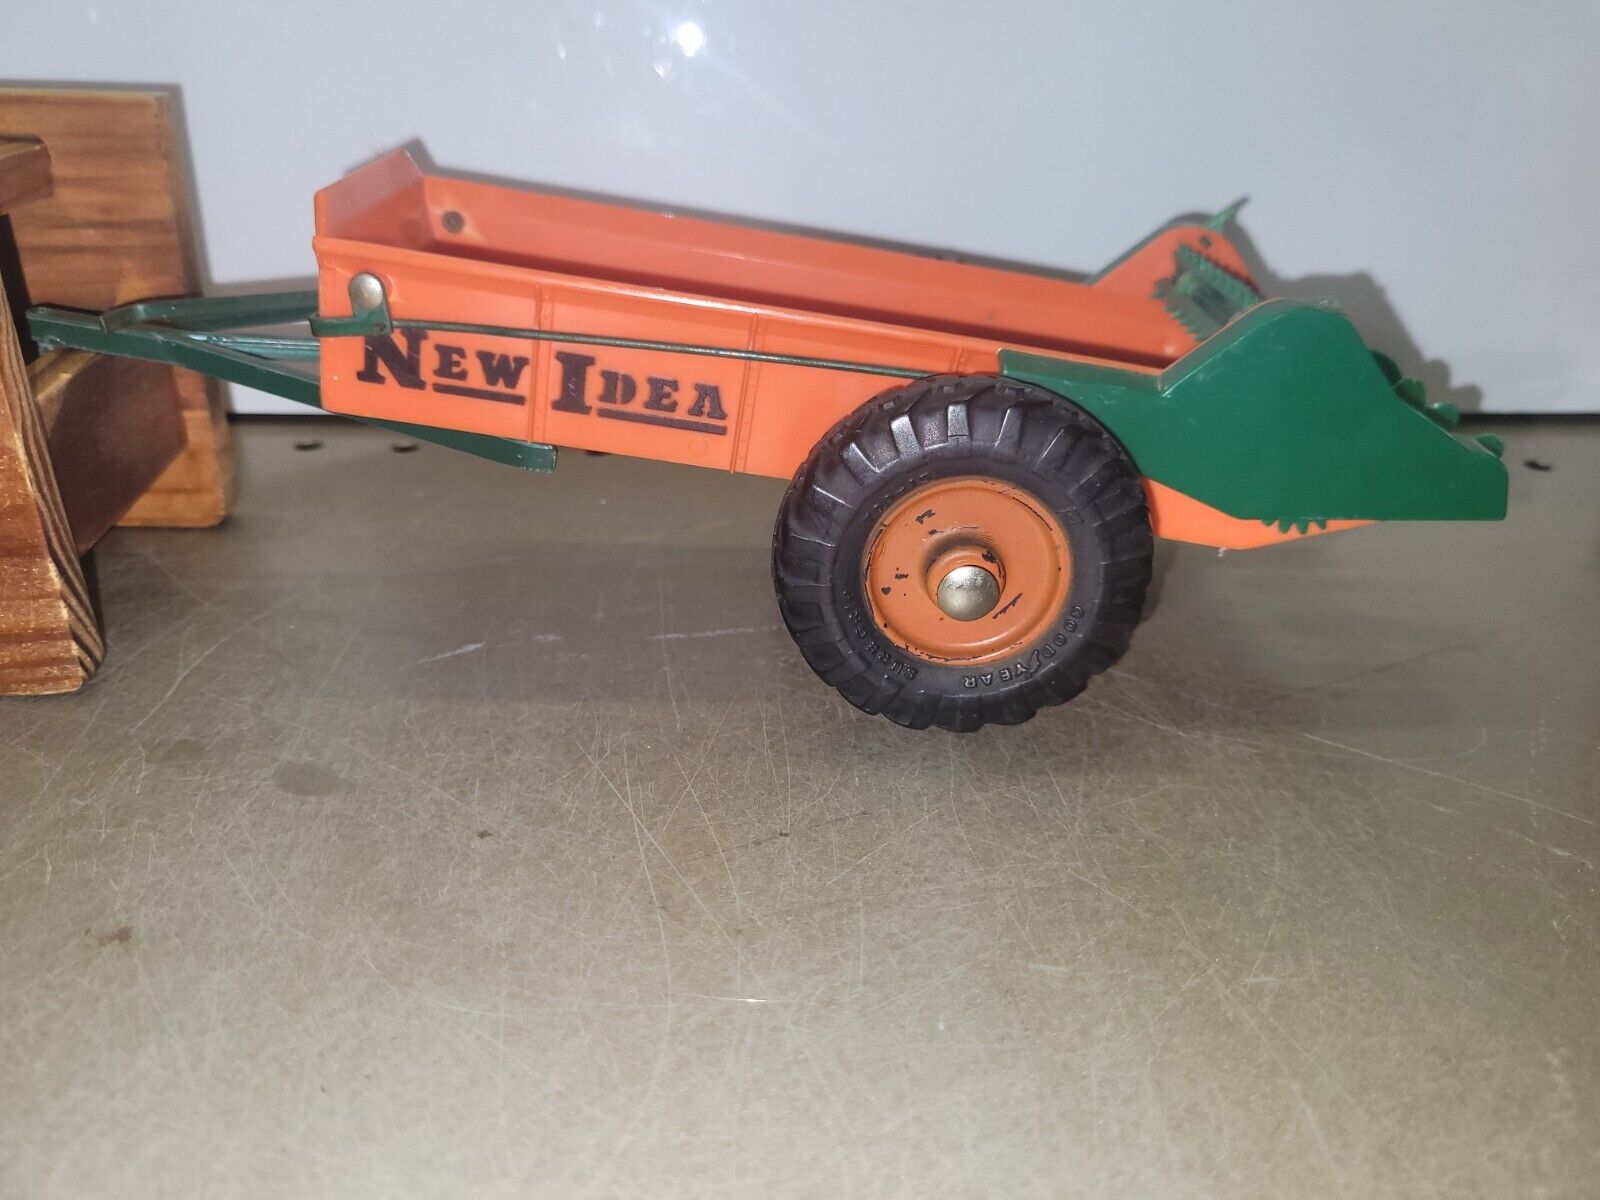 Vintage New Idea Toy Manure Spreader 1:16